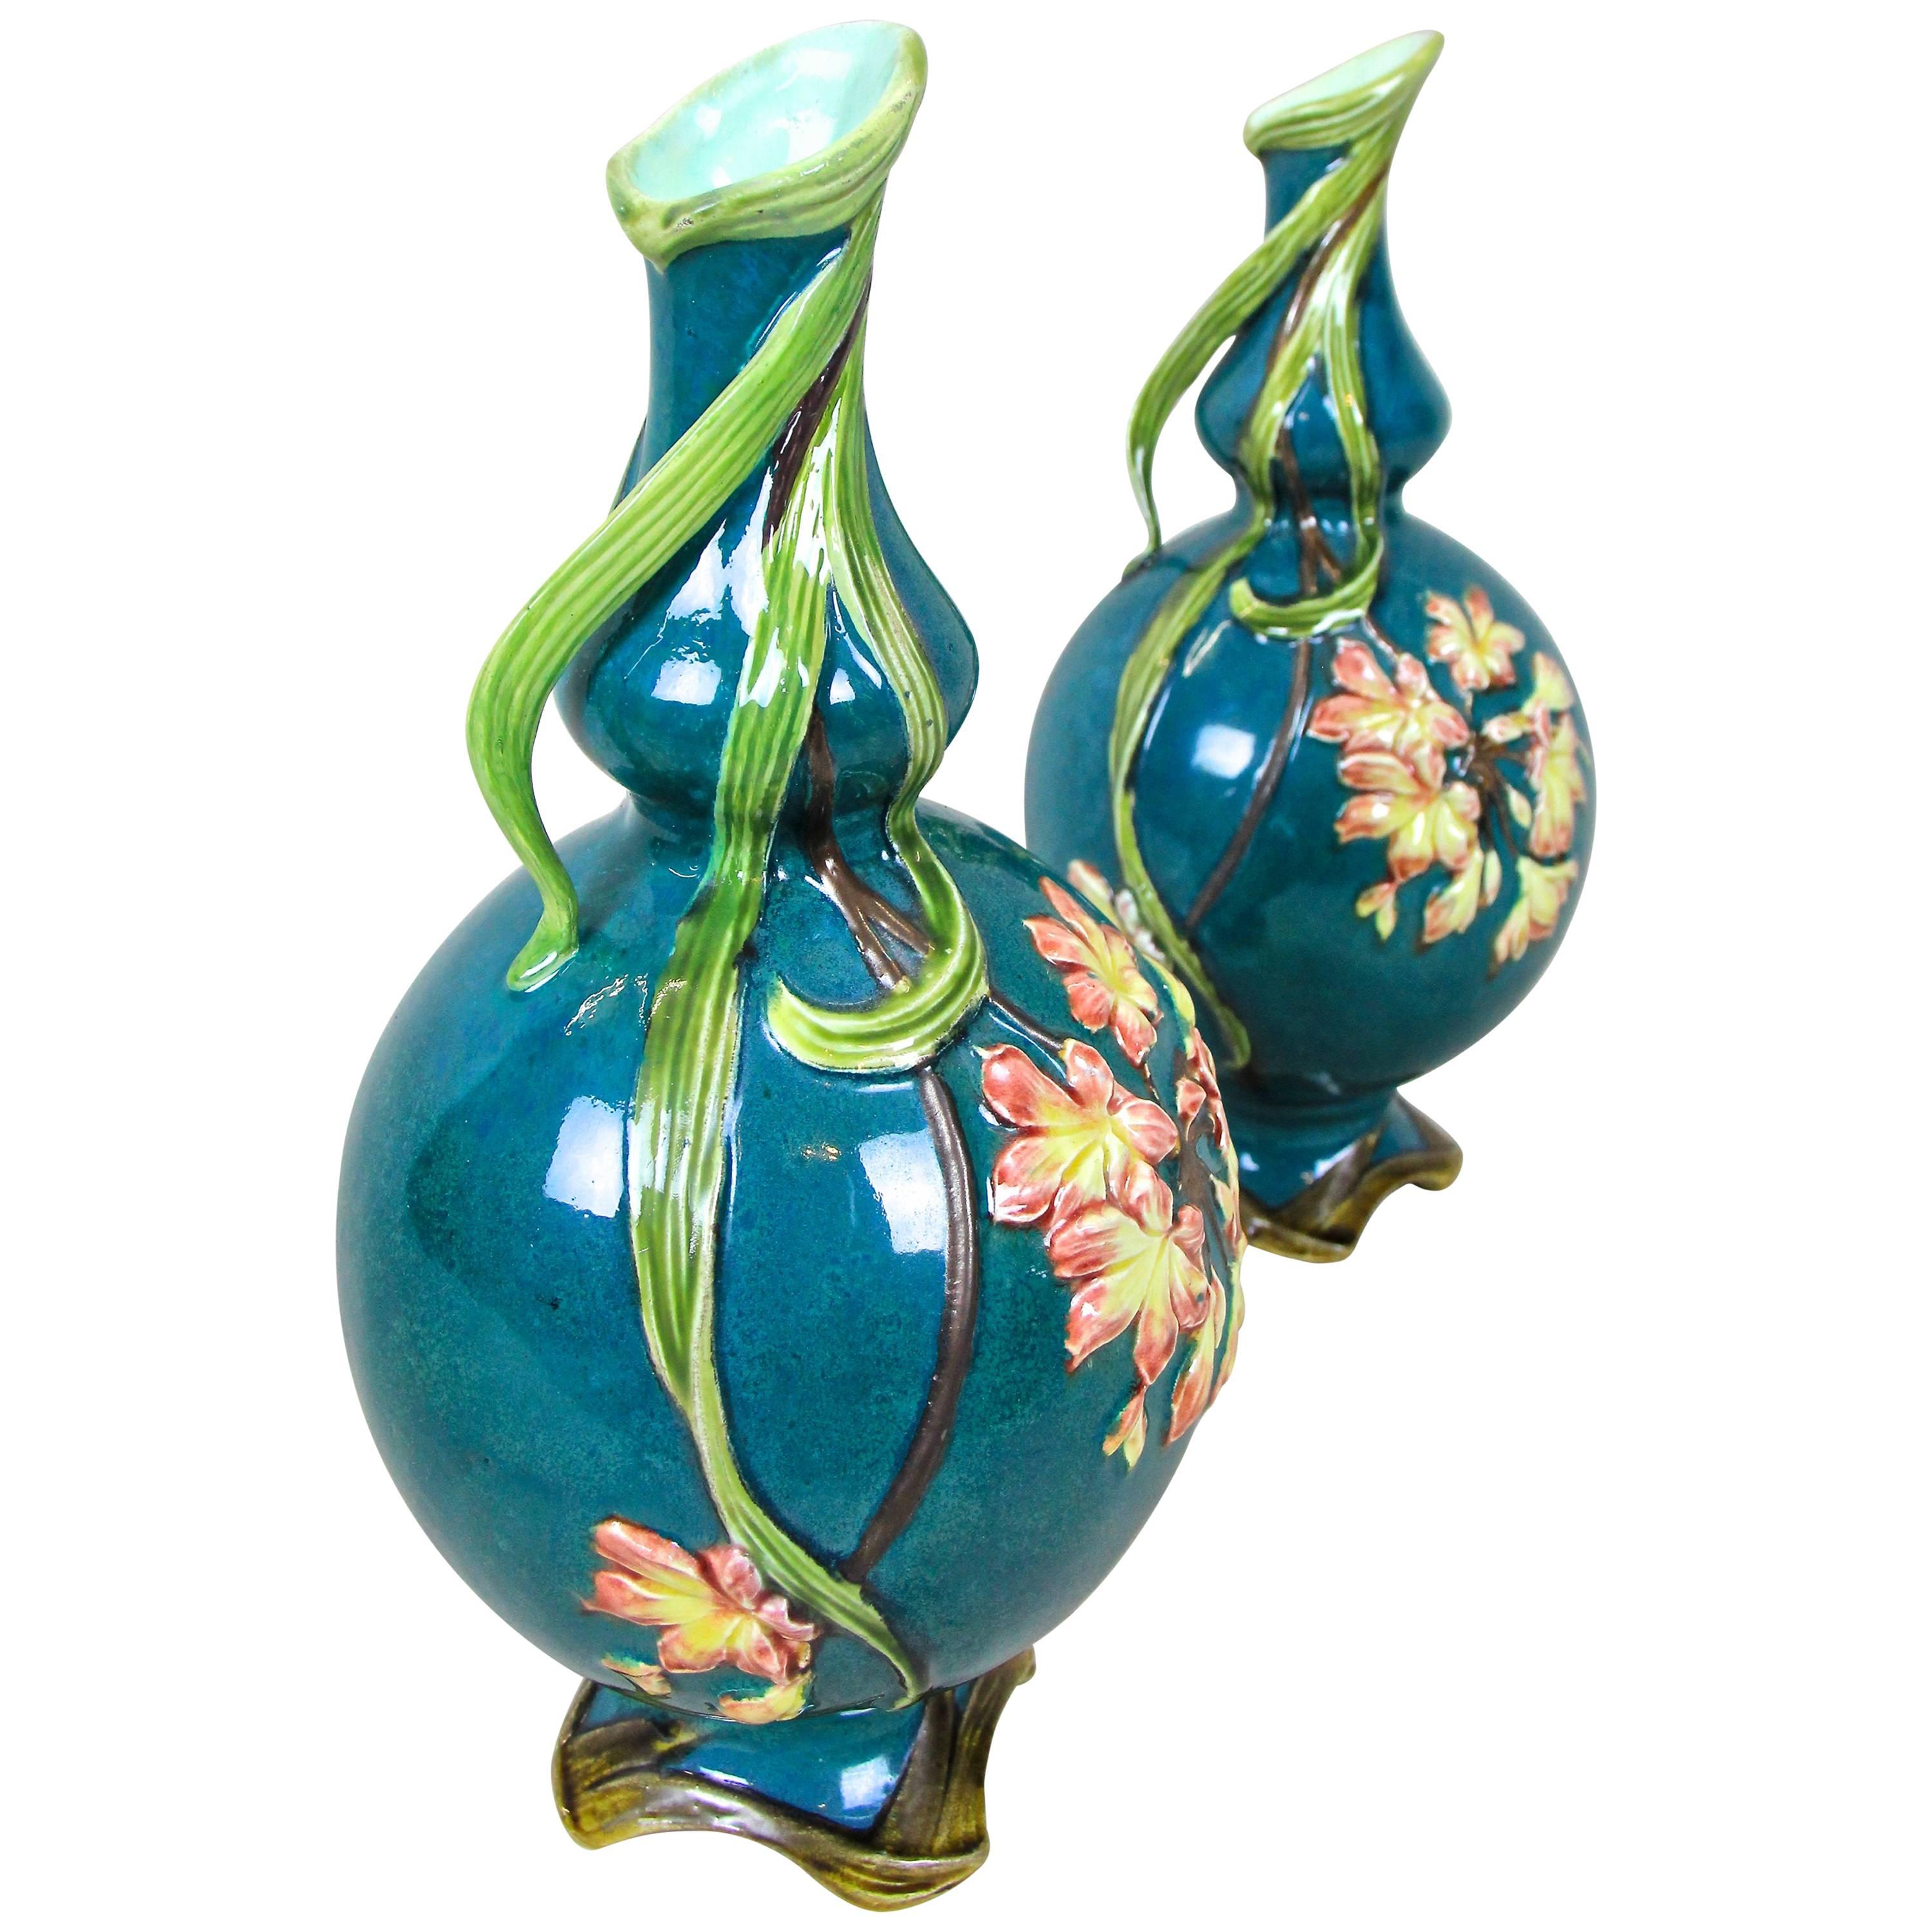 Outstanding Pair of Art Nouveau Vases, France, circa 1910